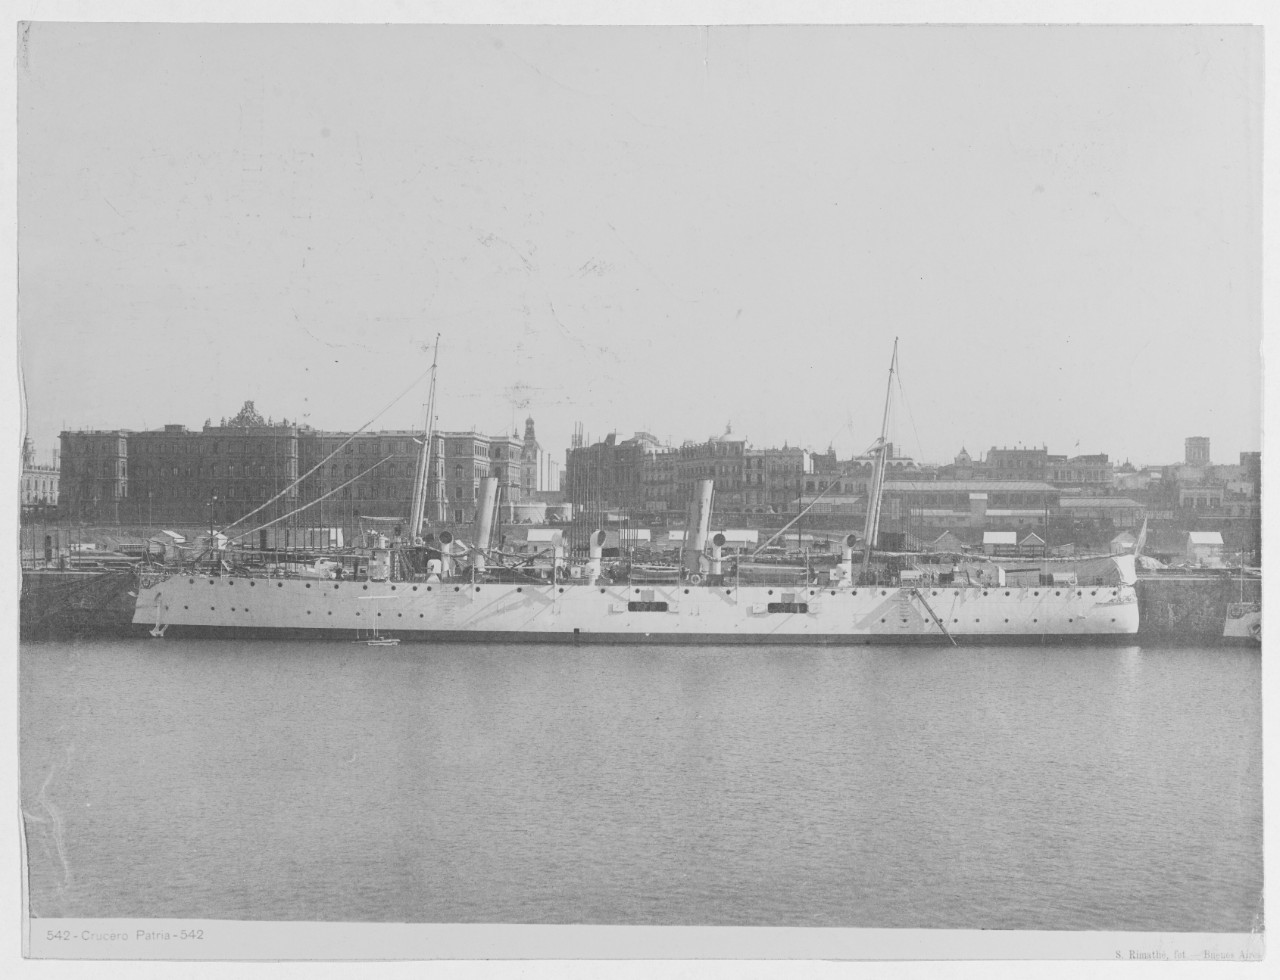 PATRIA, Argentine torpedo-gunboat, 1893